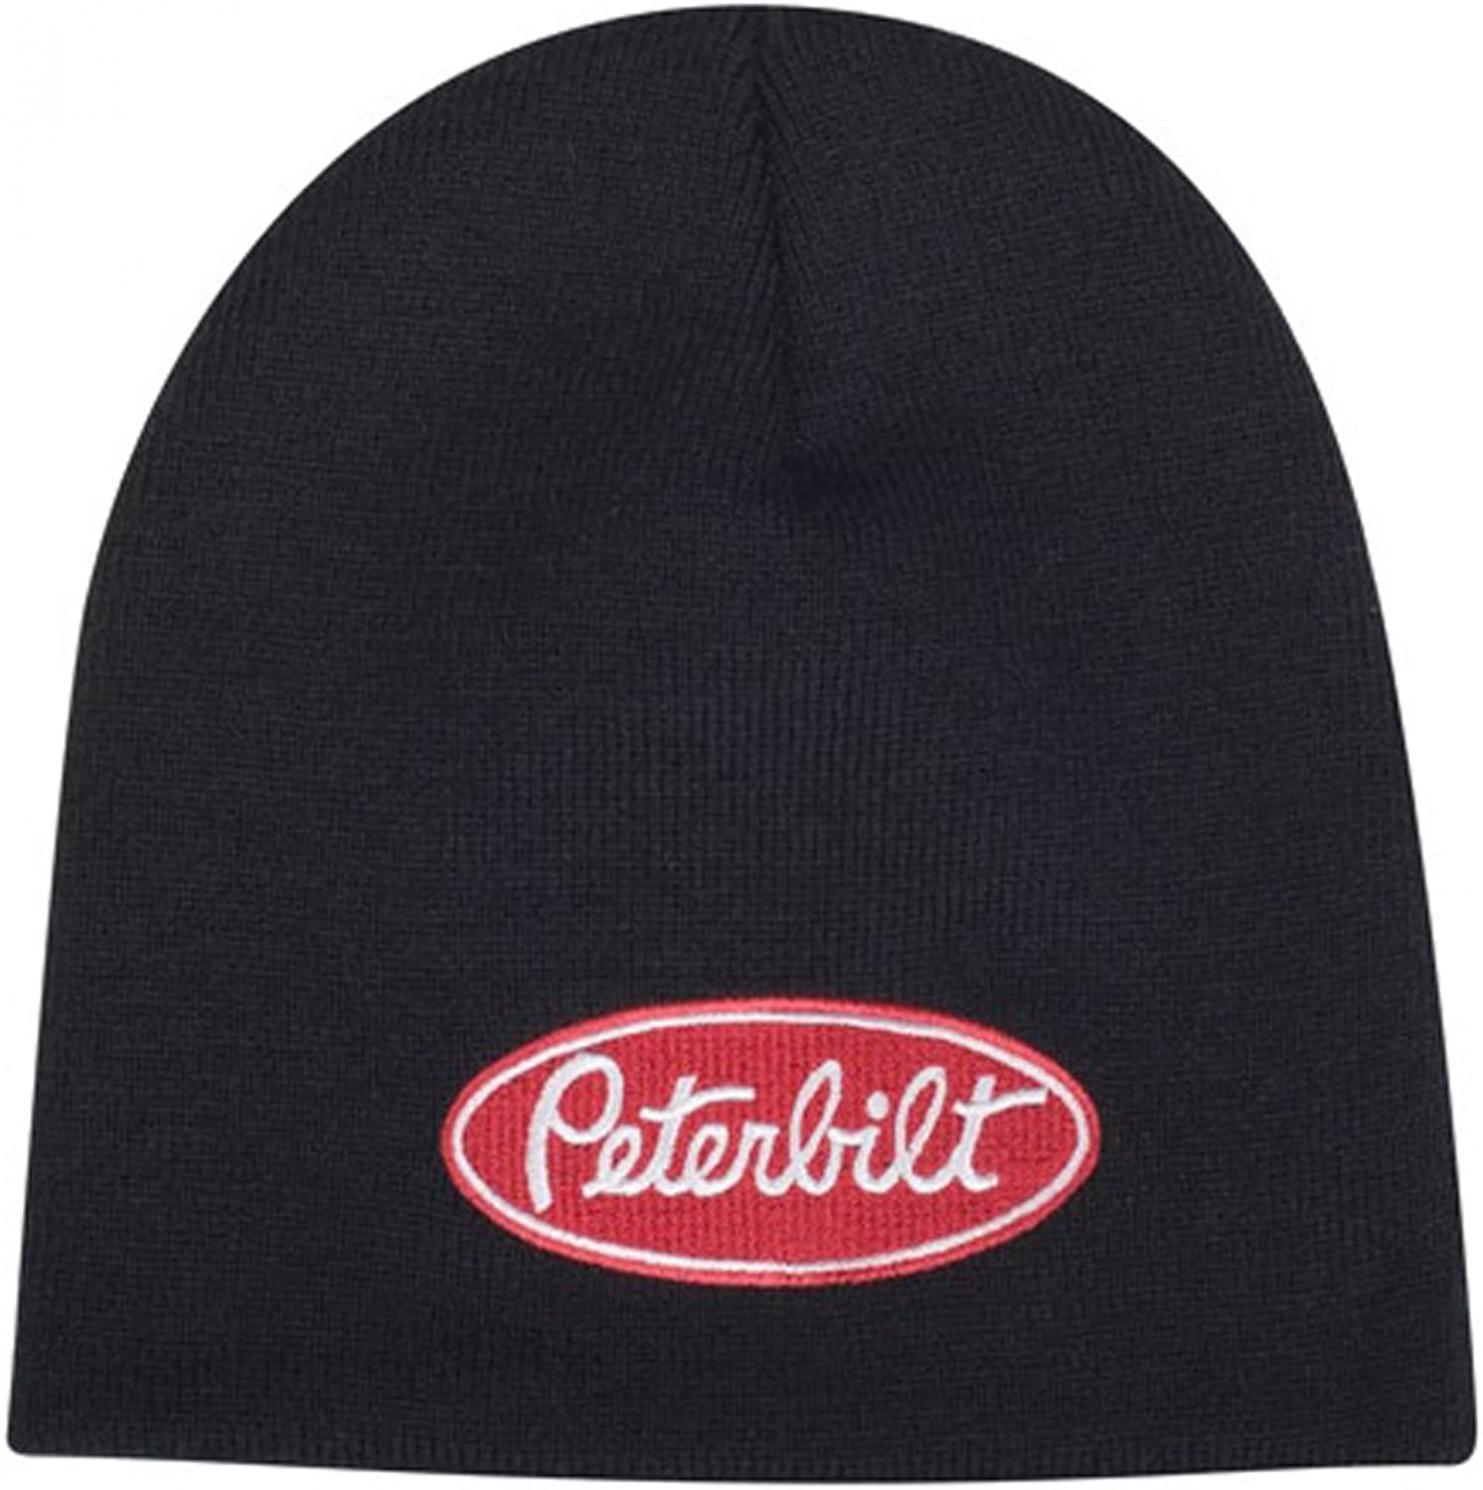 Peterbilt Motors Black Knit Winter Beanie